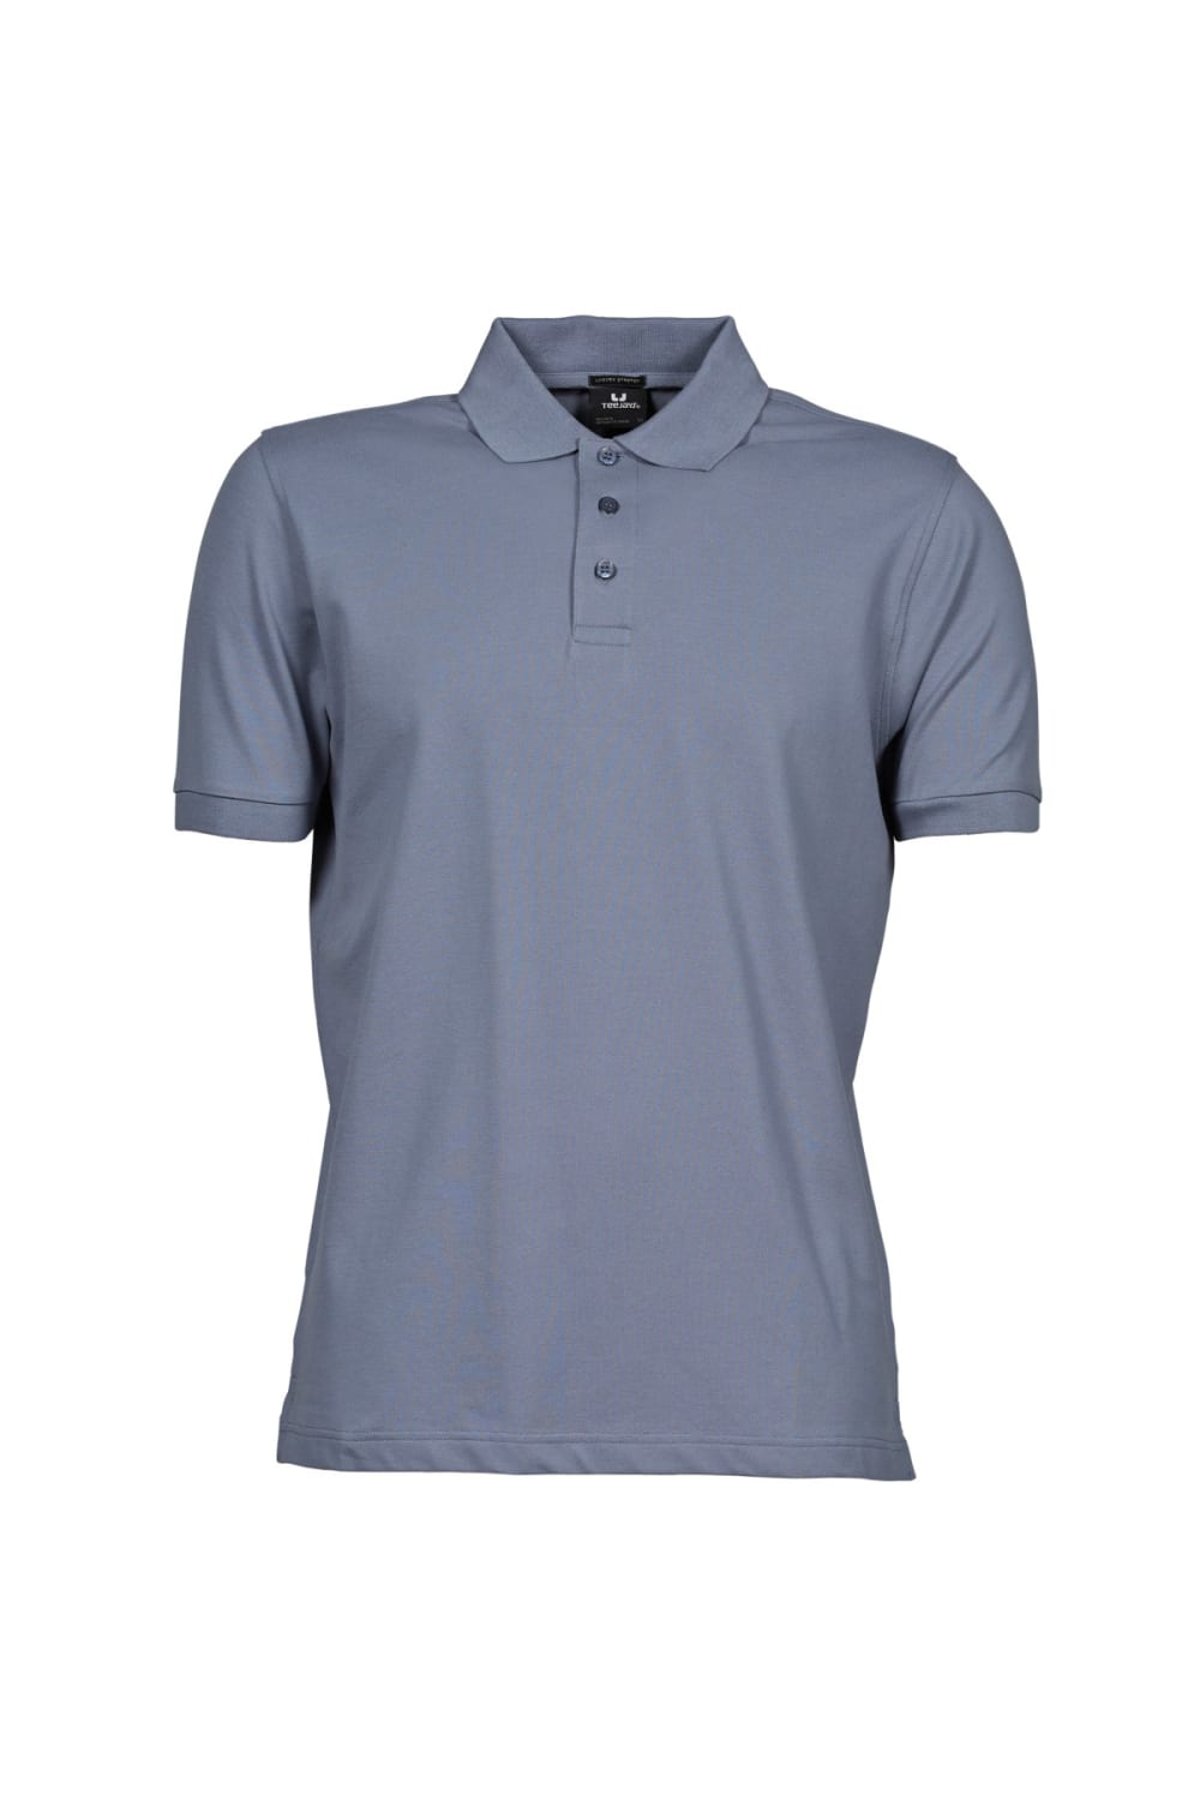 Tee Jays Womens/Ladies Luxury Stretch Short Sleeve Polo Shirt